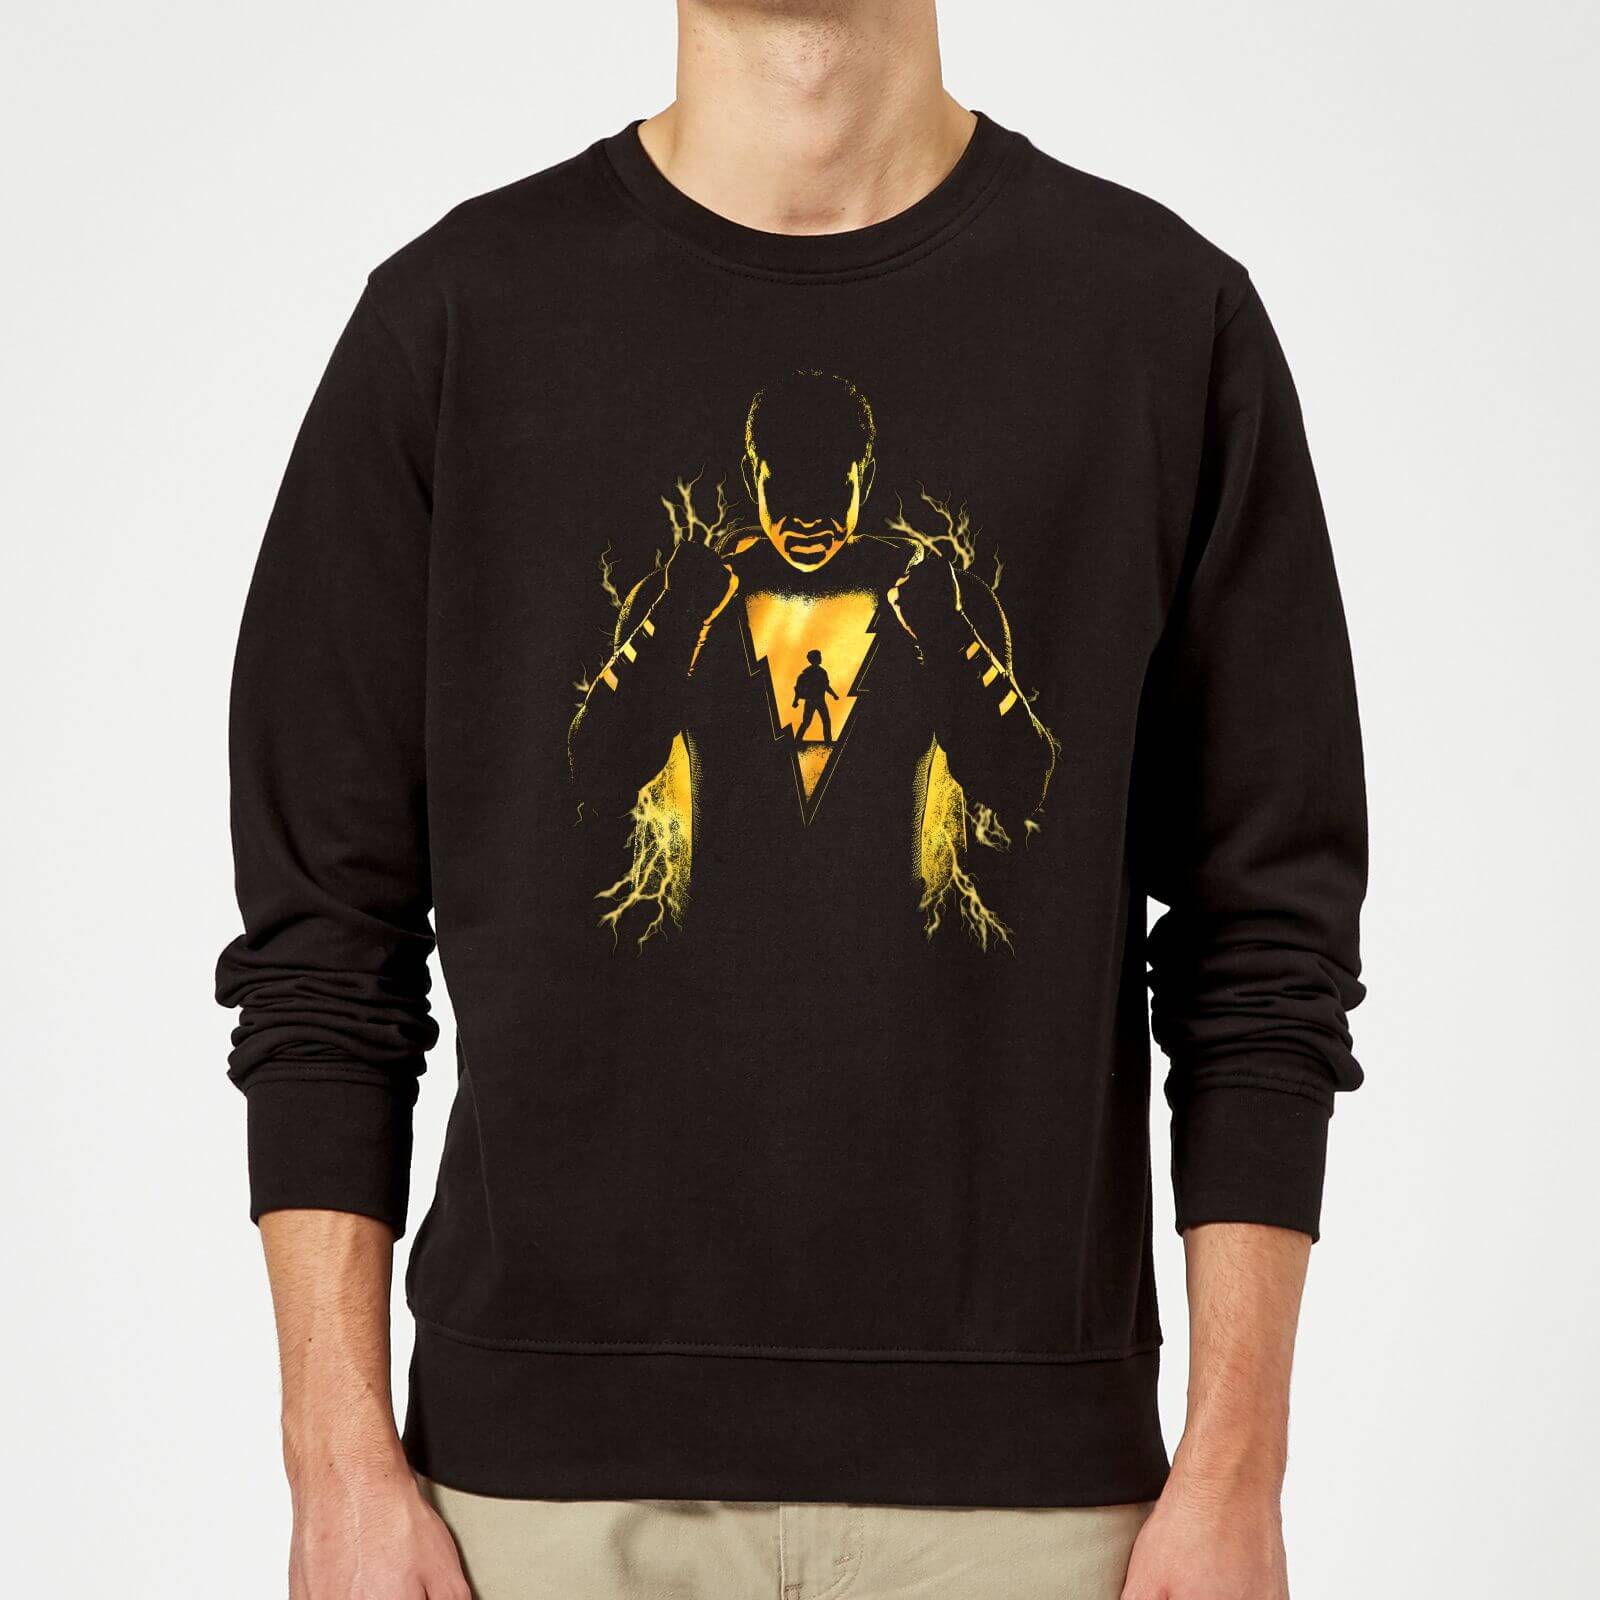 Shazam Lightning Silhouette Sweatshirt - Black - S - Black